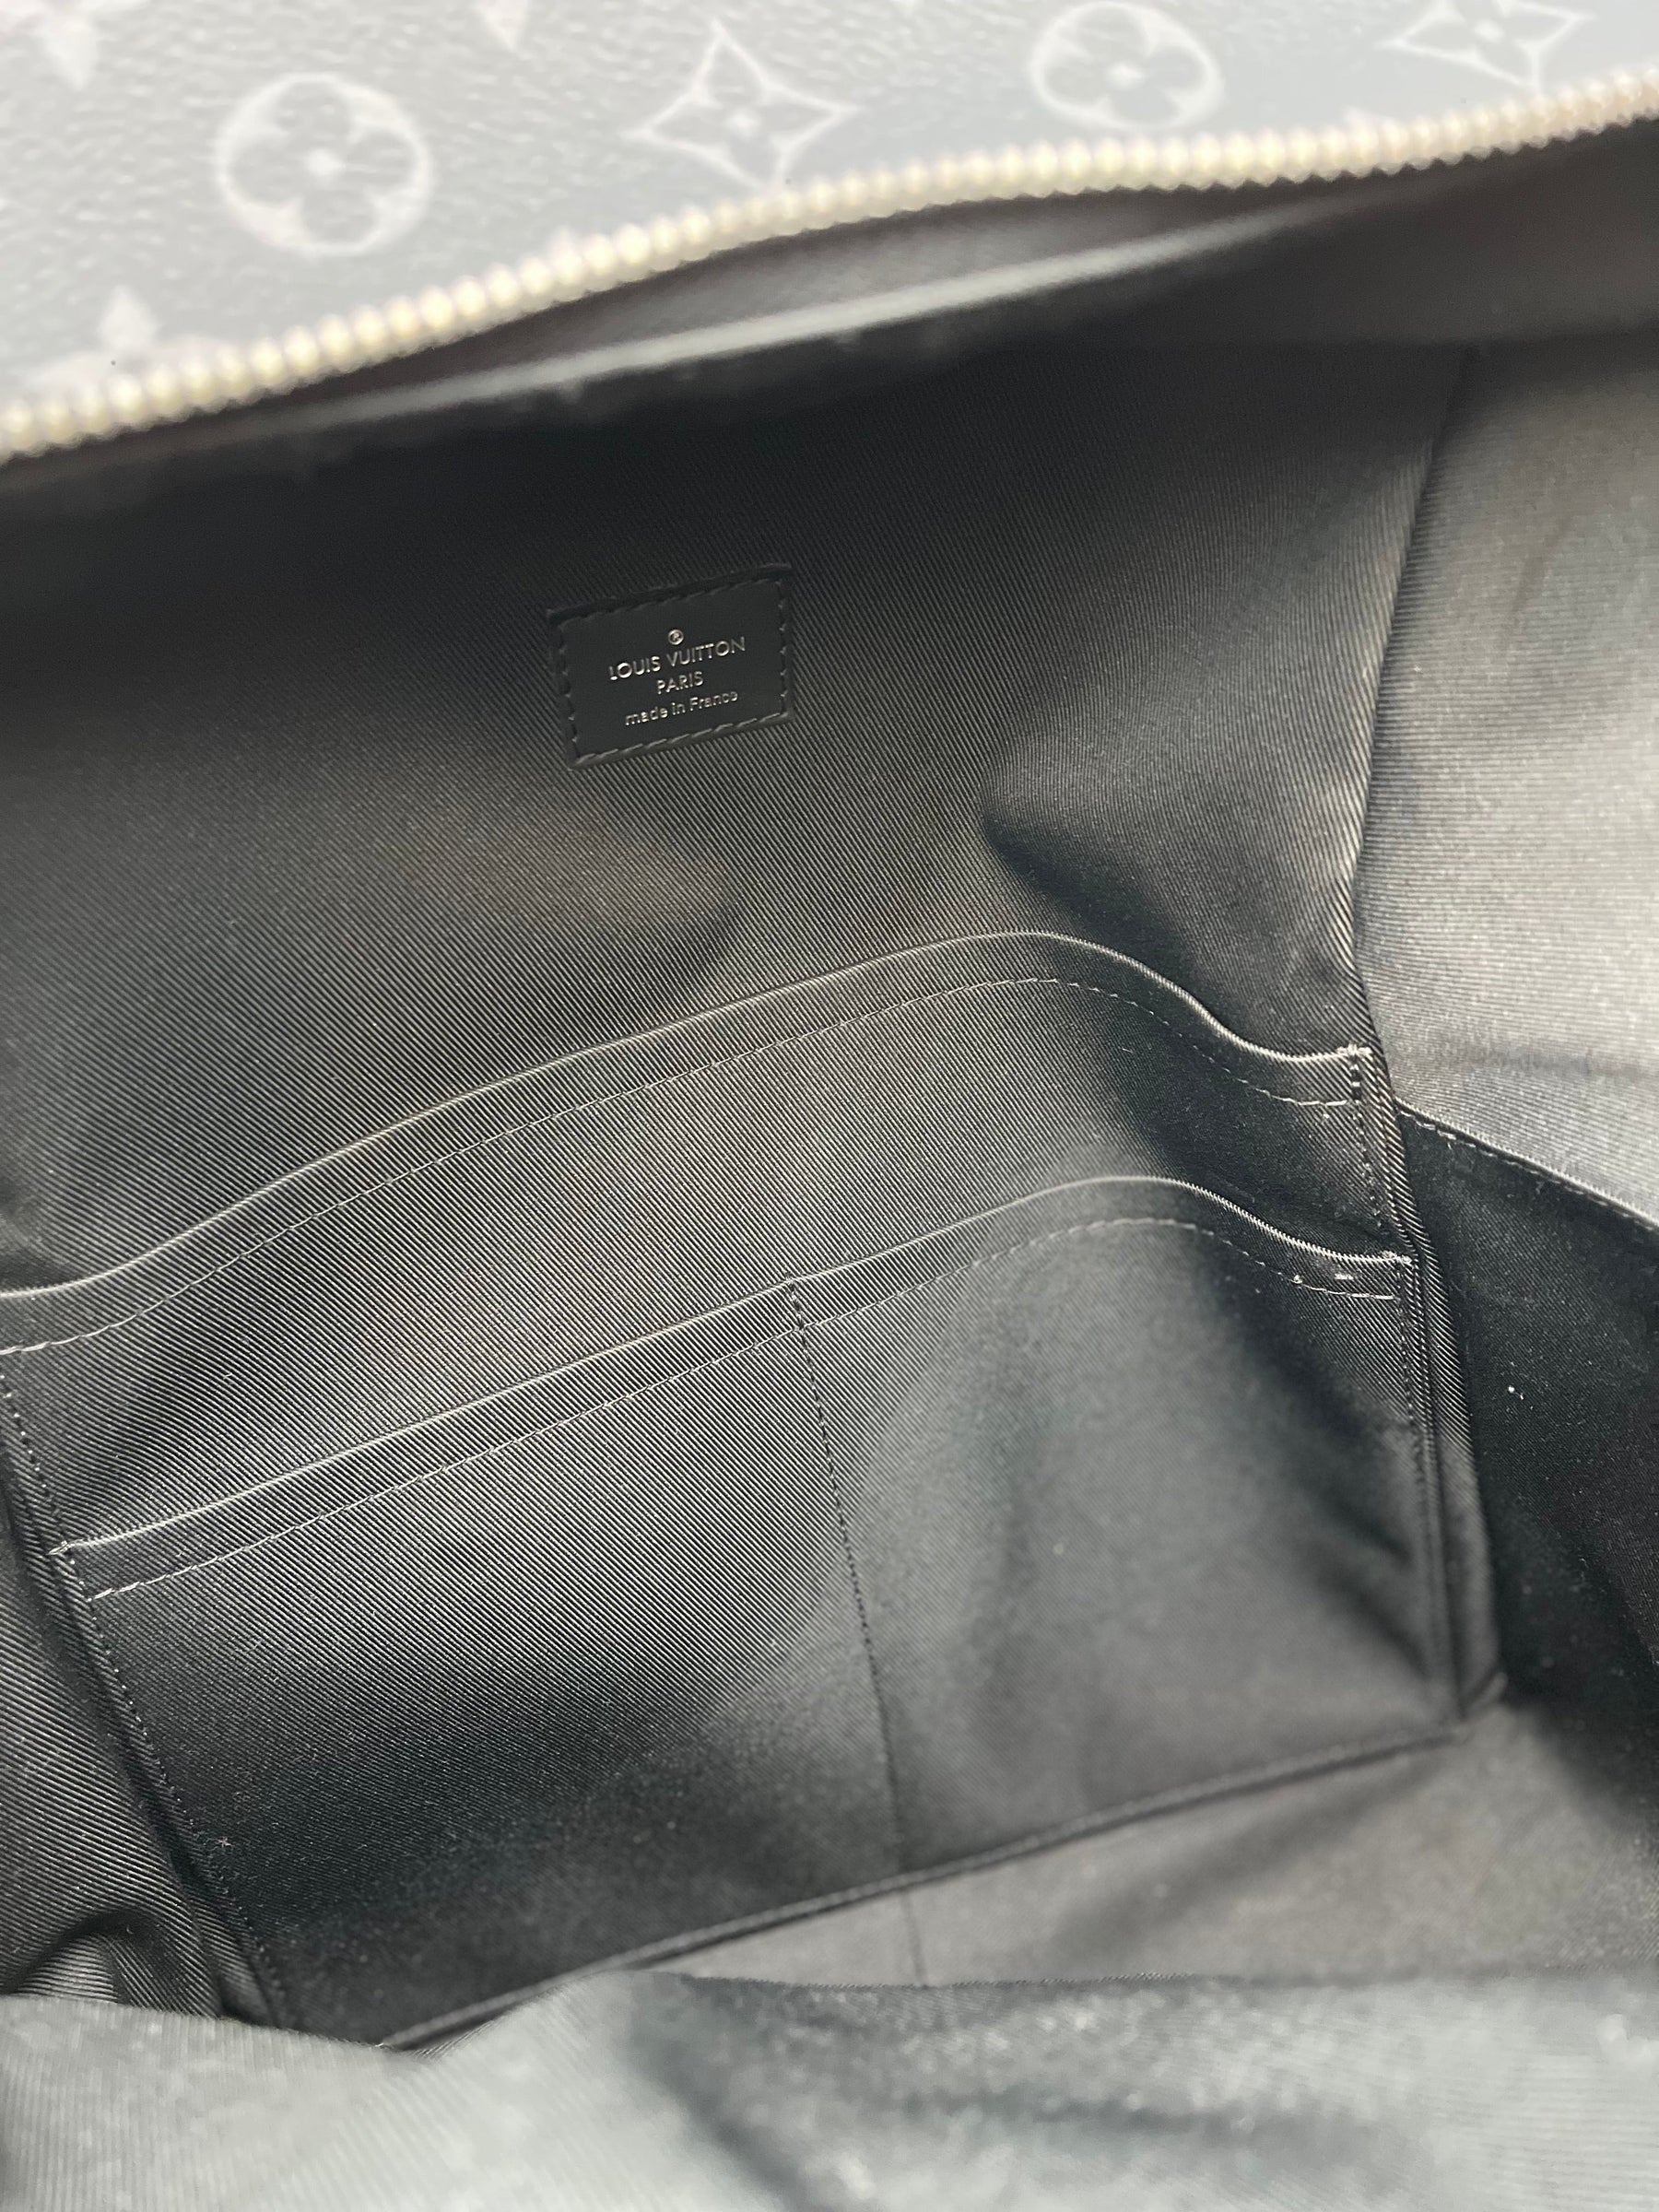 Cowhide Leather Trim | Ruthenium Metallic | Adjustable Black Leather Straps | 3 Internal Pockets | 2 Zippered Pockets | 1 Front Magnetic Closure Pocket | Top Handle | Excellent Condition